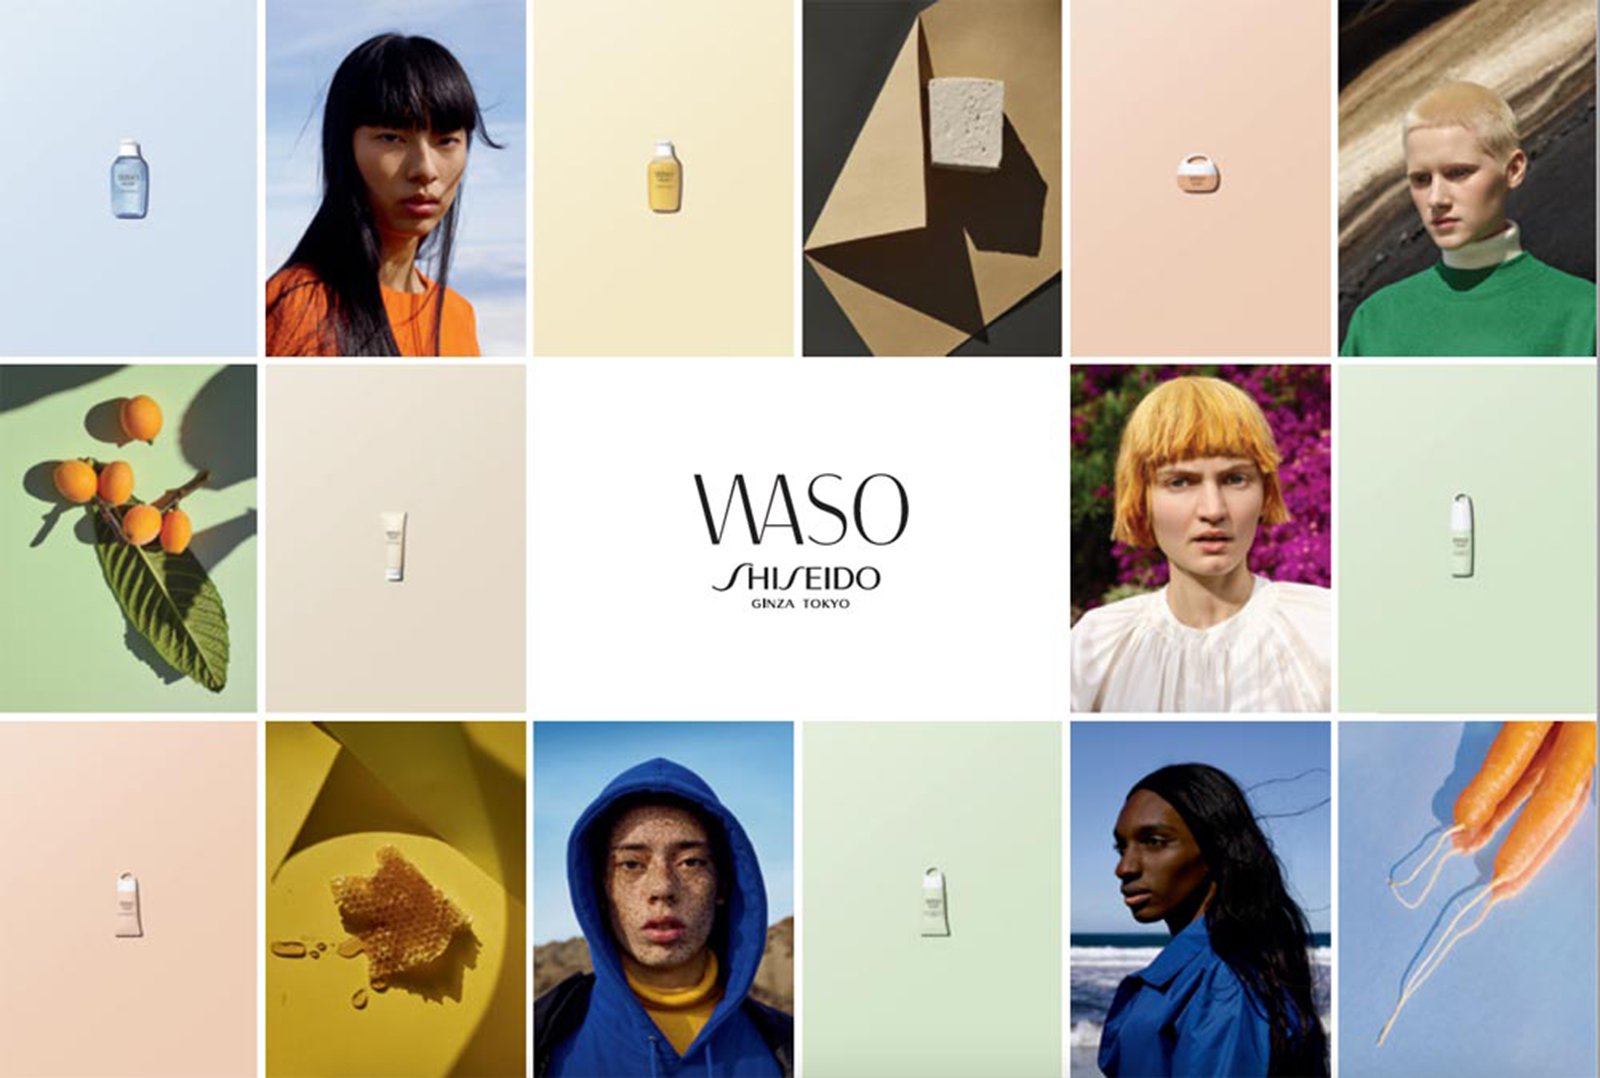 Shiseido WASO skincare for Millennials